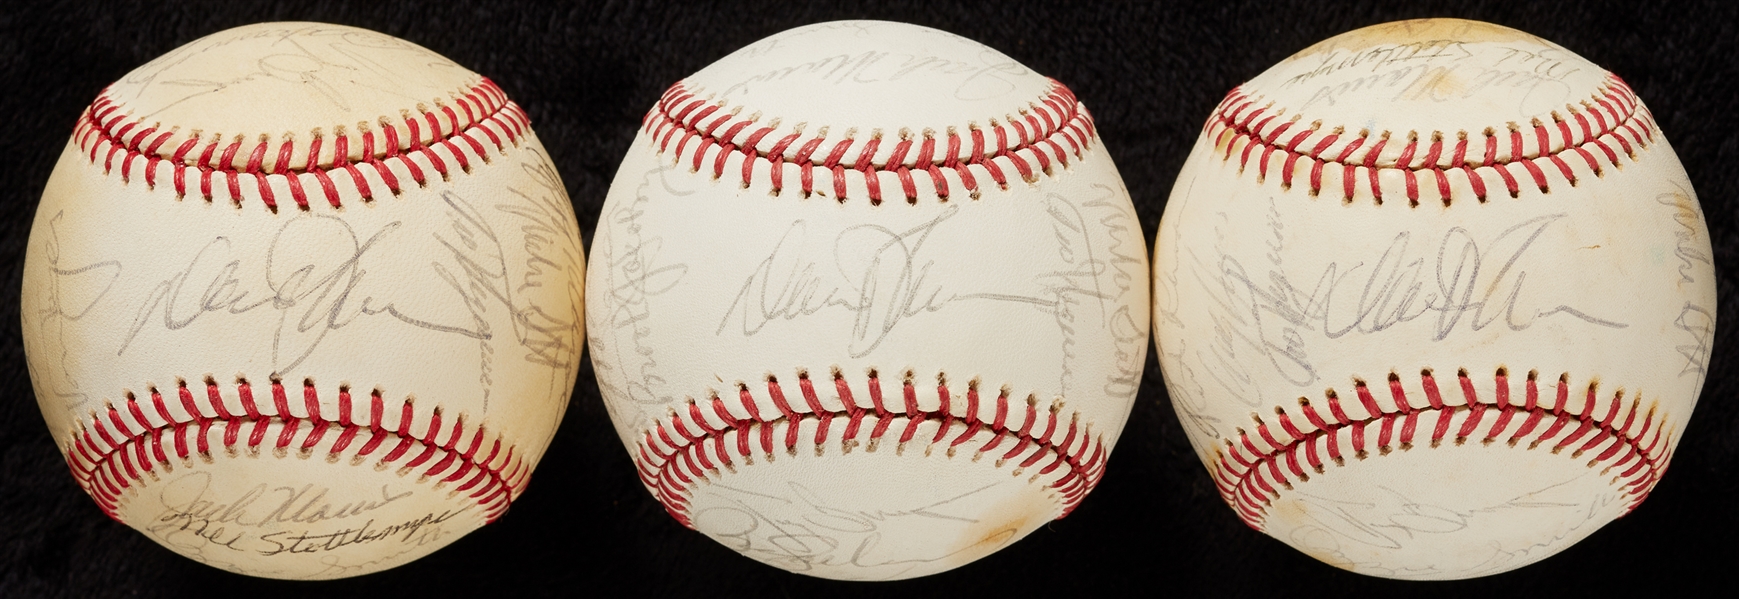 1986 Super Major Series '86 Multi-Signed Baseballs (3)